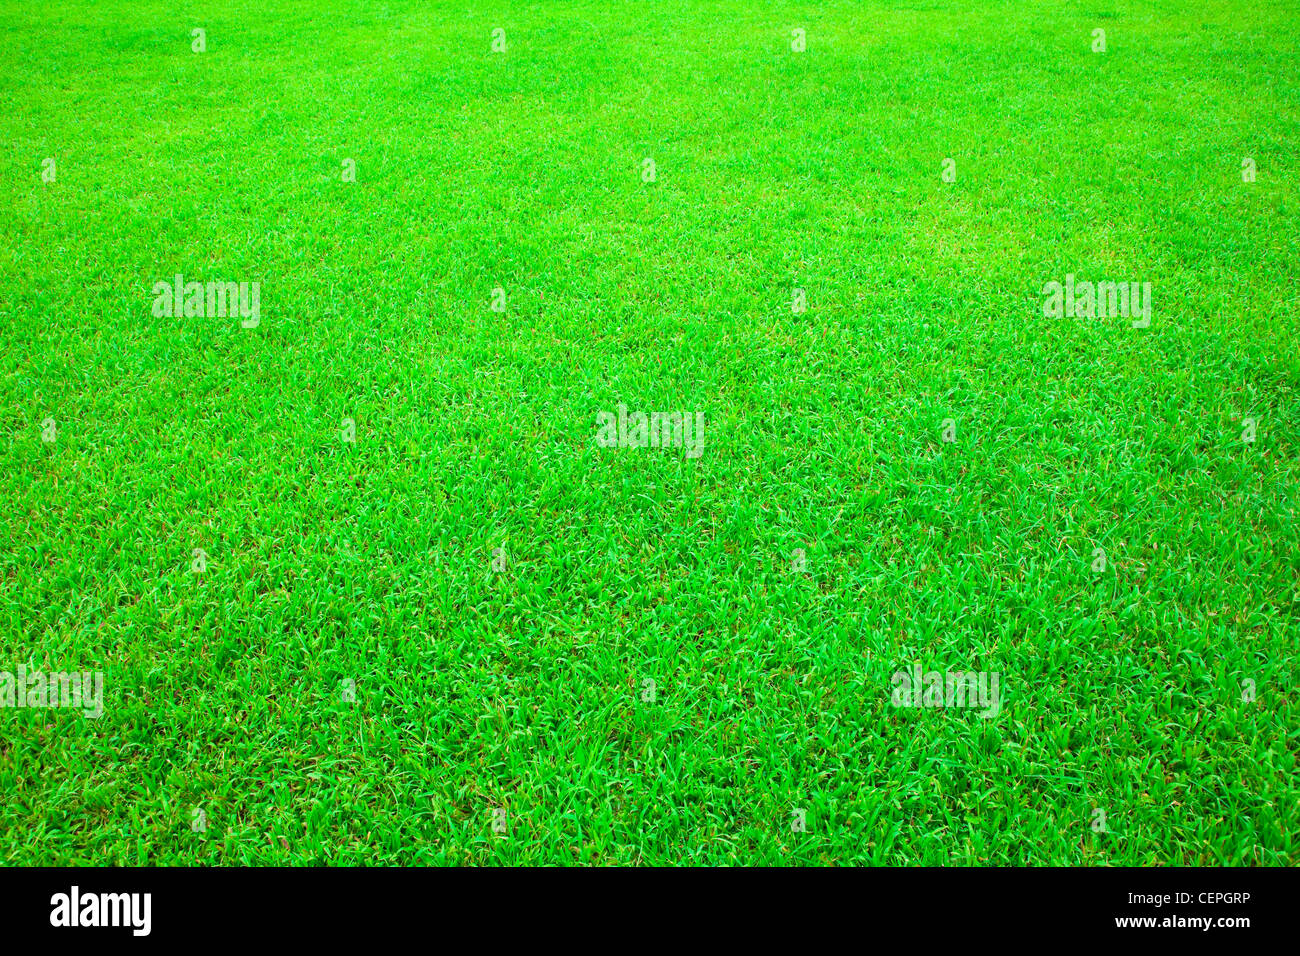 Green grass full screen wallpaper background Stock Photo